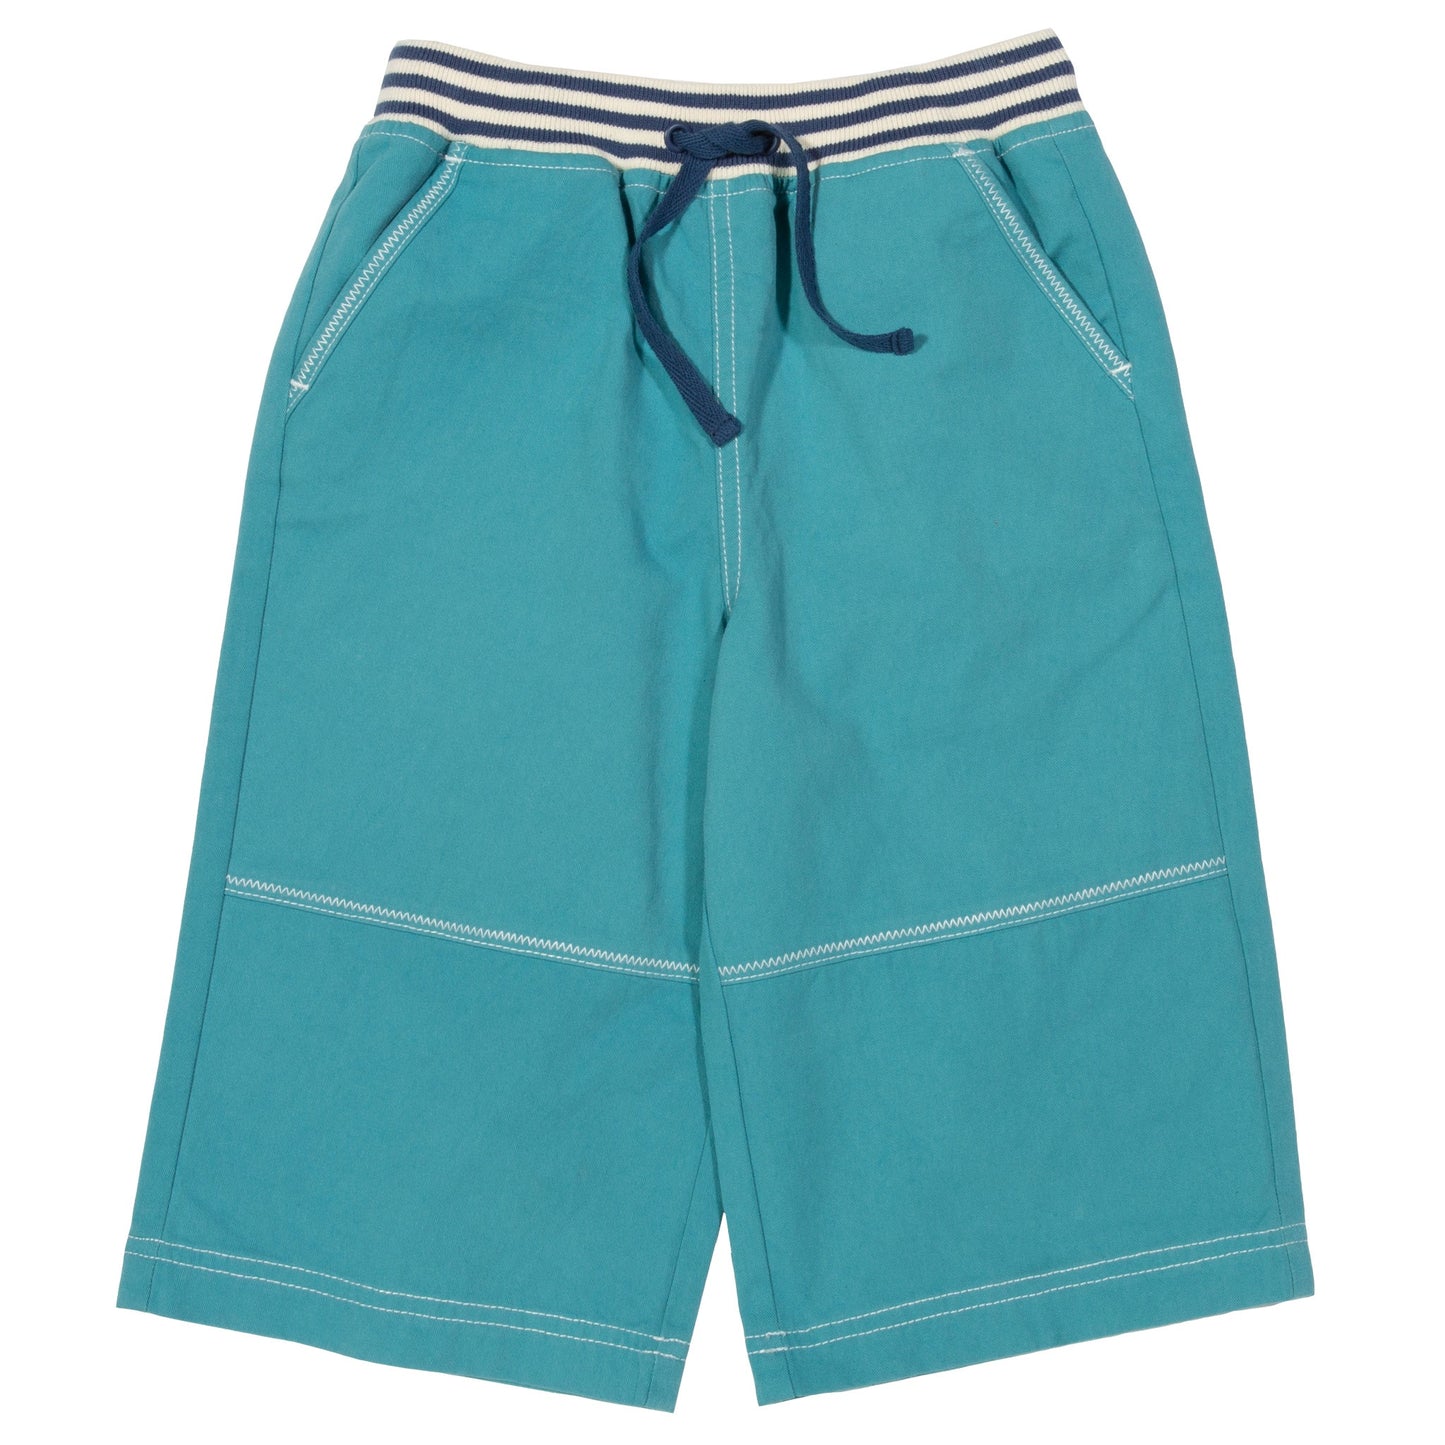 Boardwalk shorts Aqua